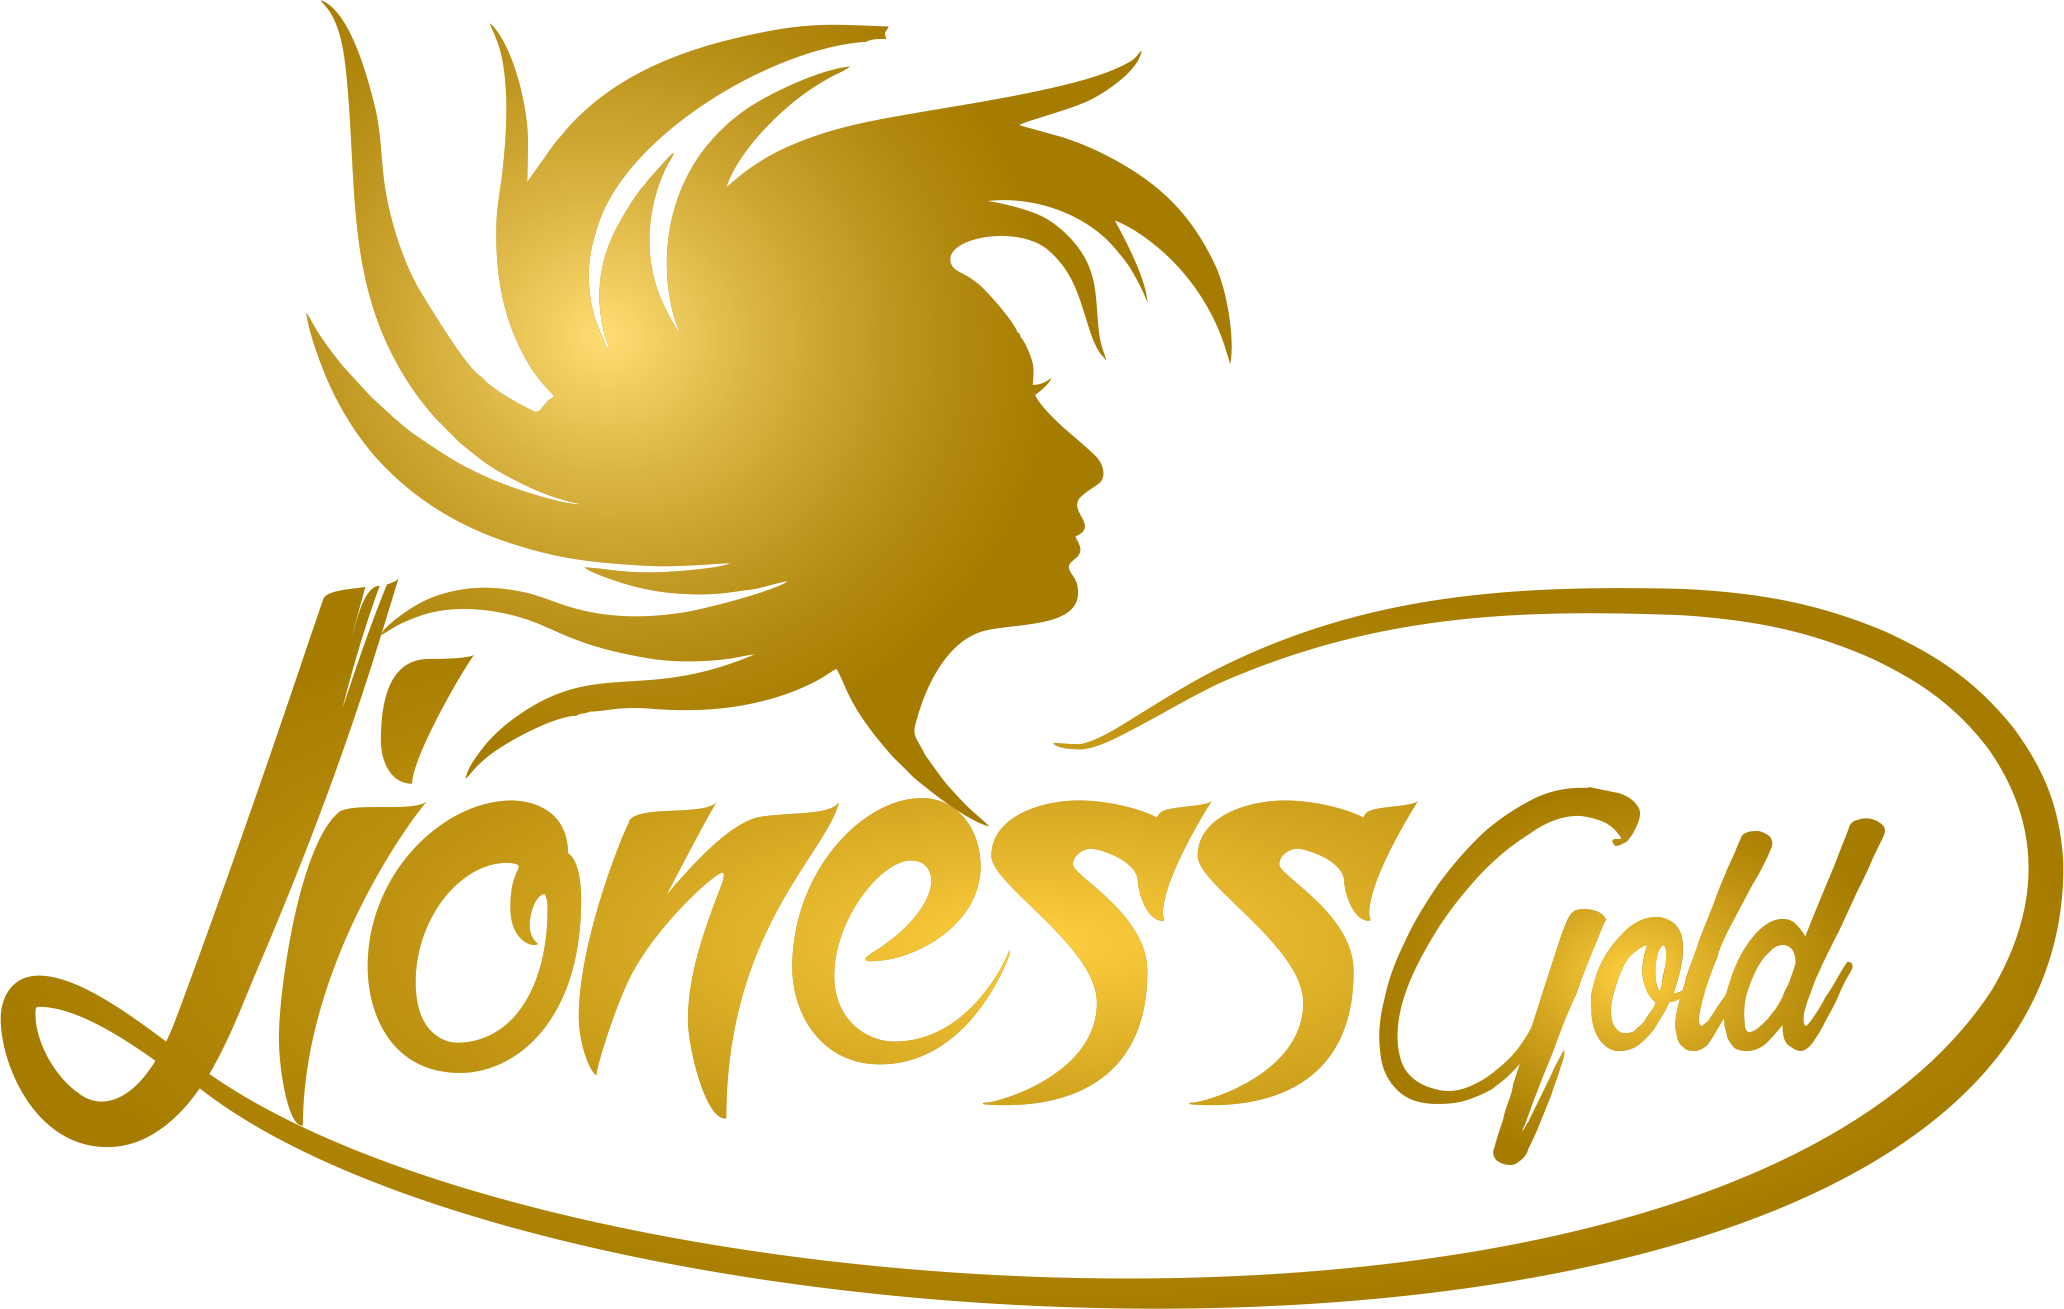 Lioness Gold Models - Transparent Gold Hair Logo Png Clipart - Large Size P...